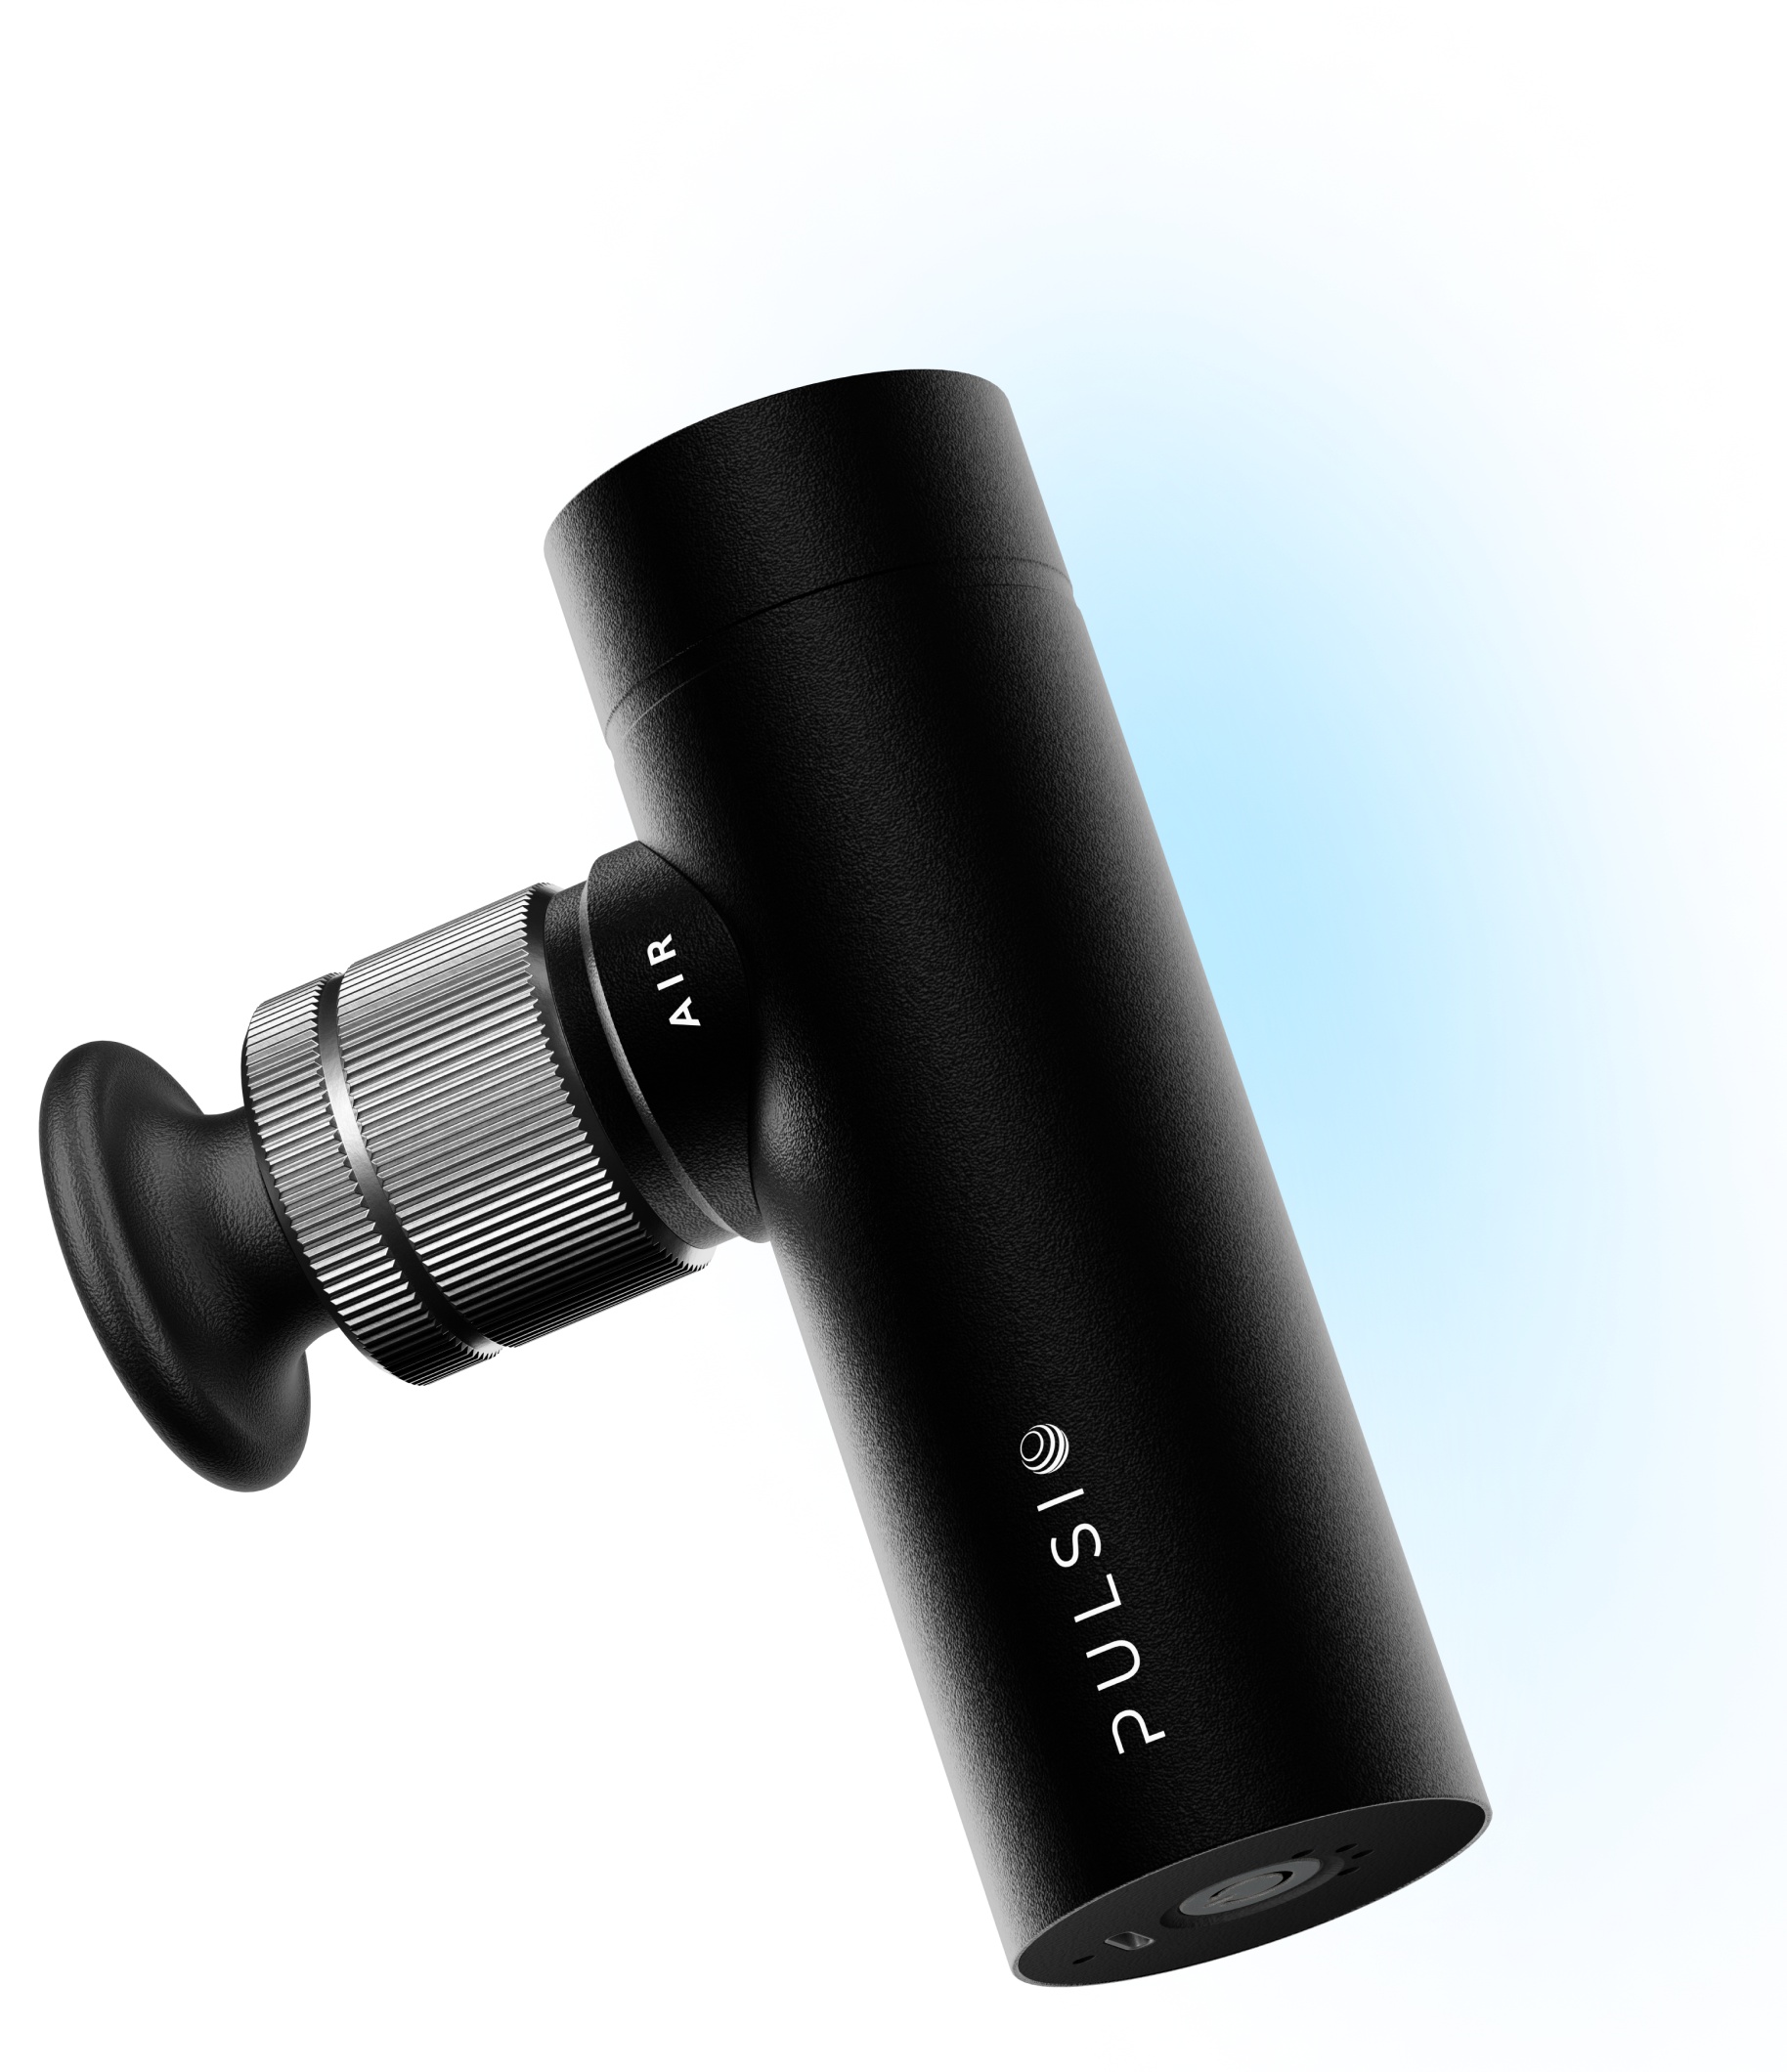 Portable black massage gun against a black background with blue halo effect.